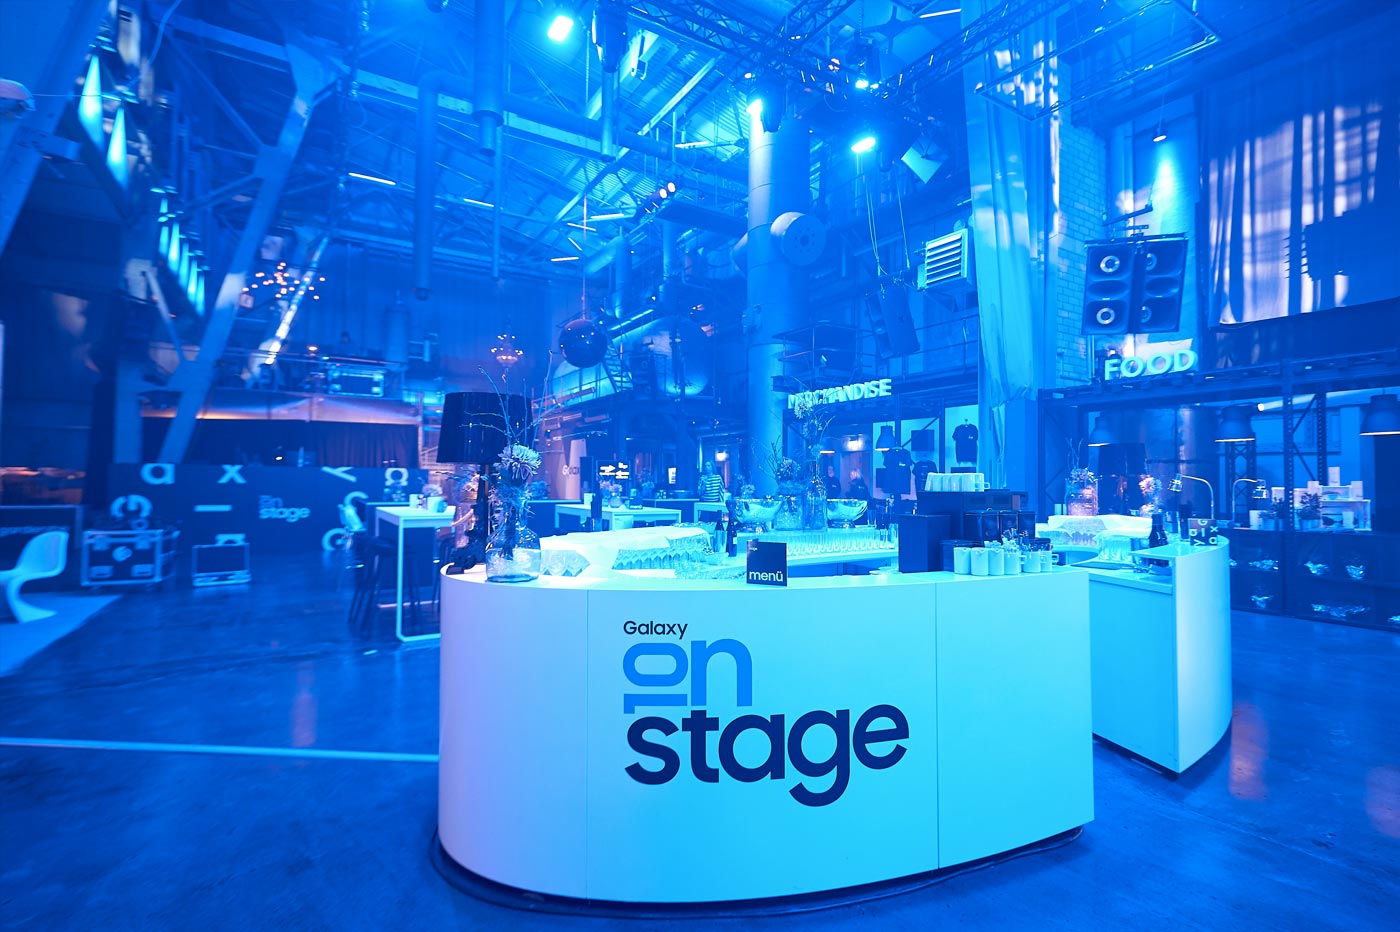 Samsung Event location - Galaxy on Stage